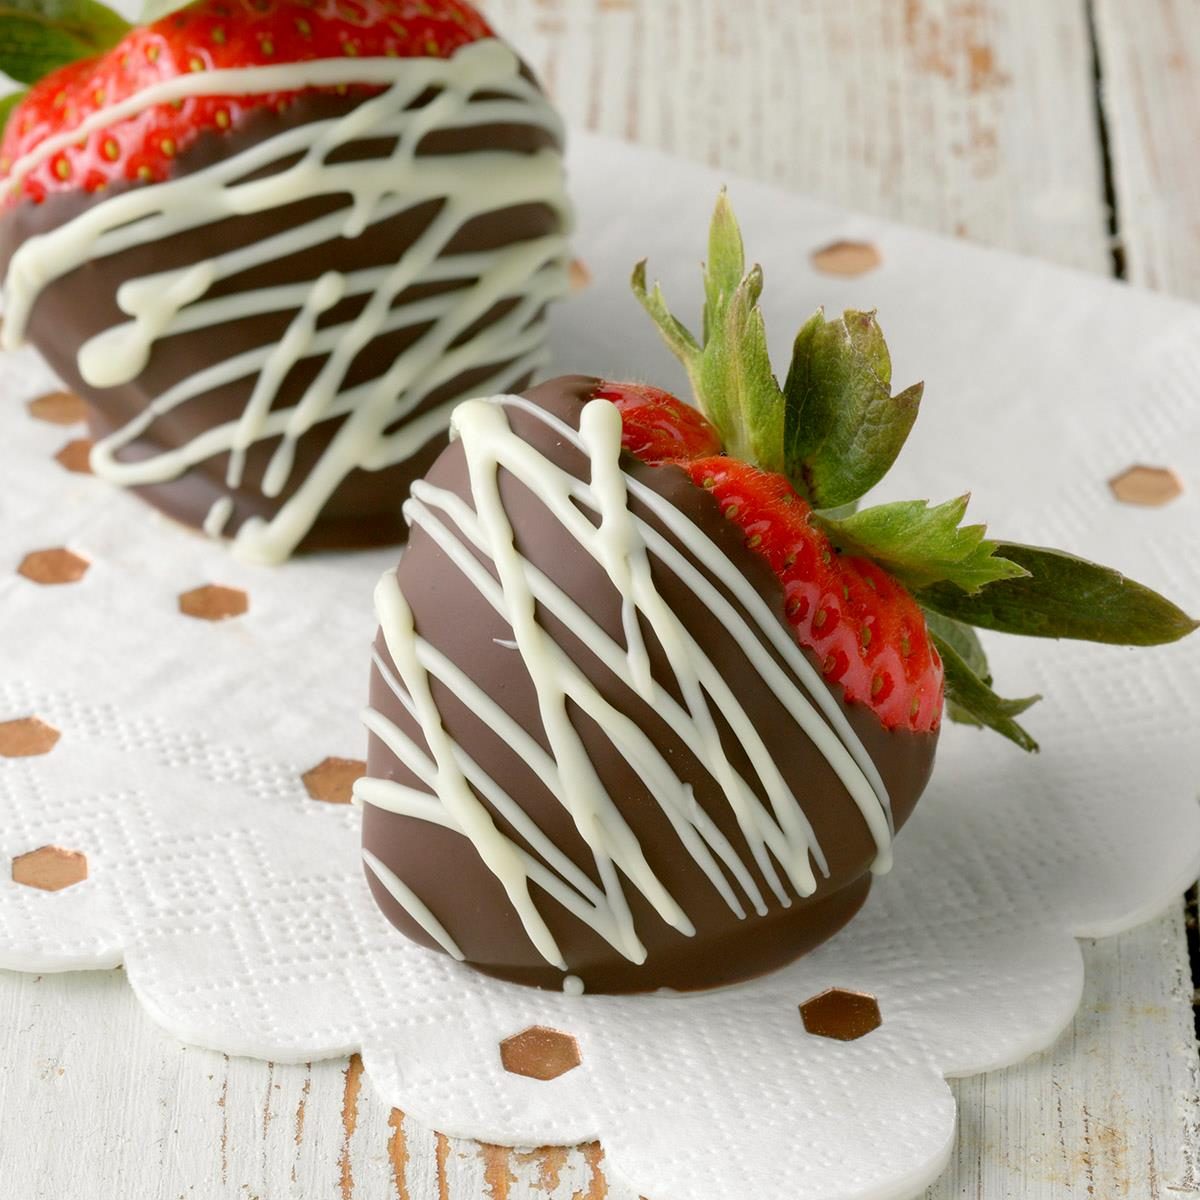 https://www.tasteofhome.com/wp-content/uploads/2018/01/Chocolate-Dipped-Strawberries_EXPS_TOHcom19_23016_B11_20_6b.jpg